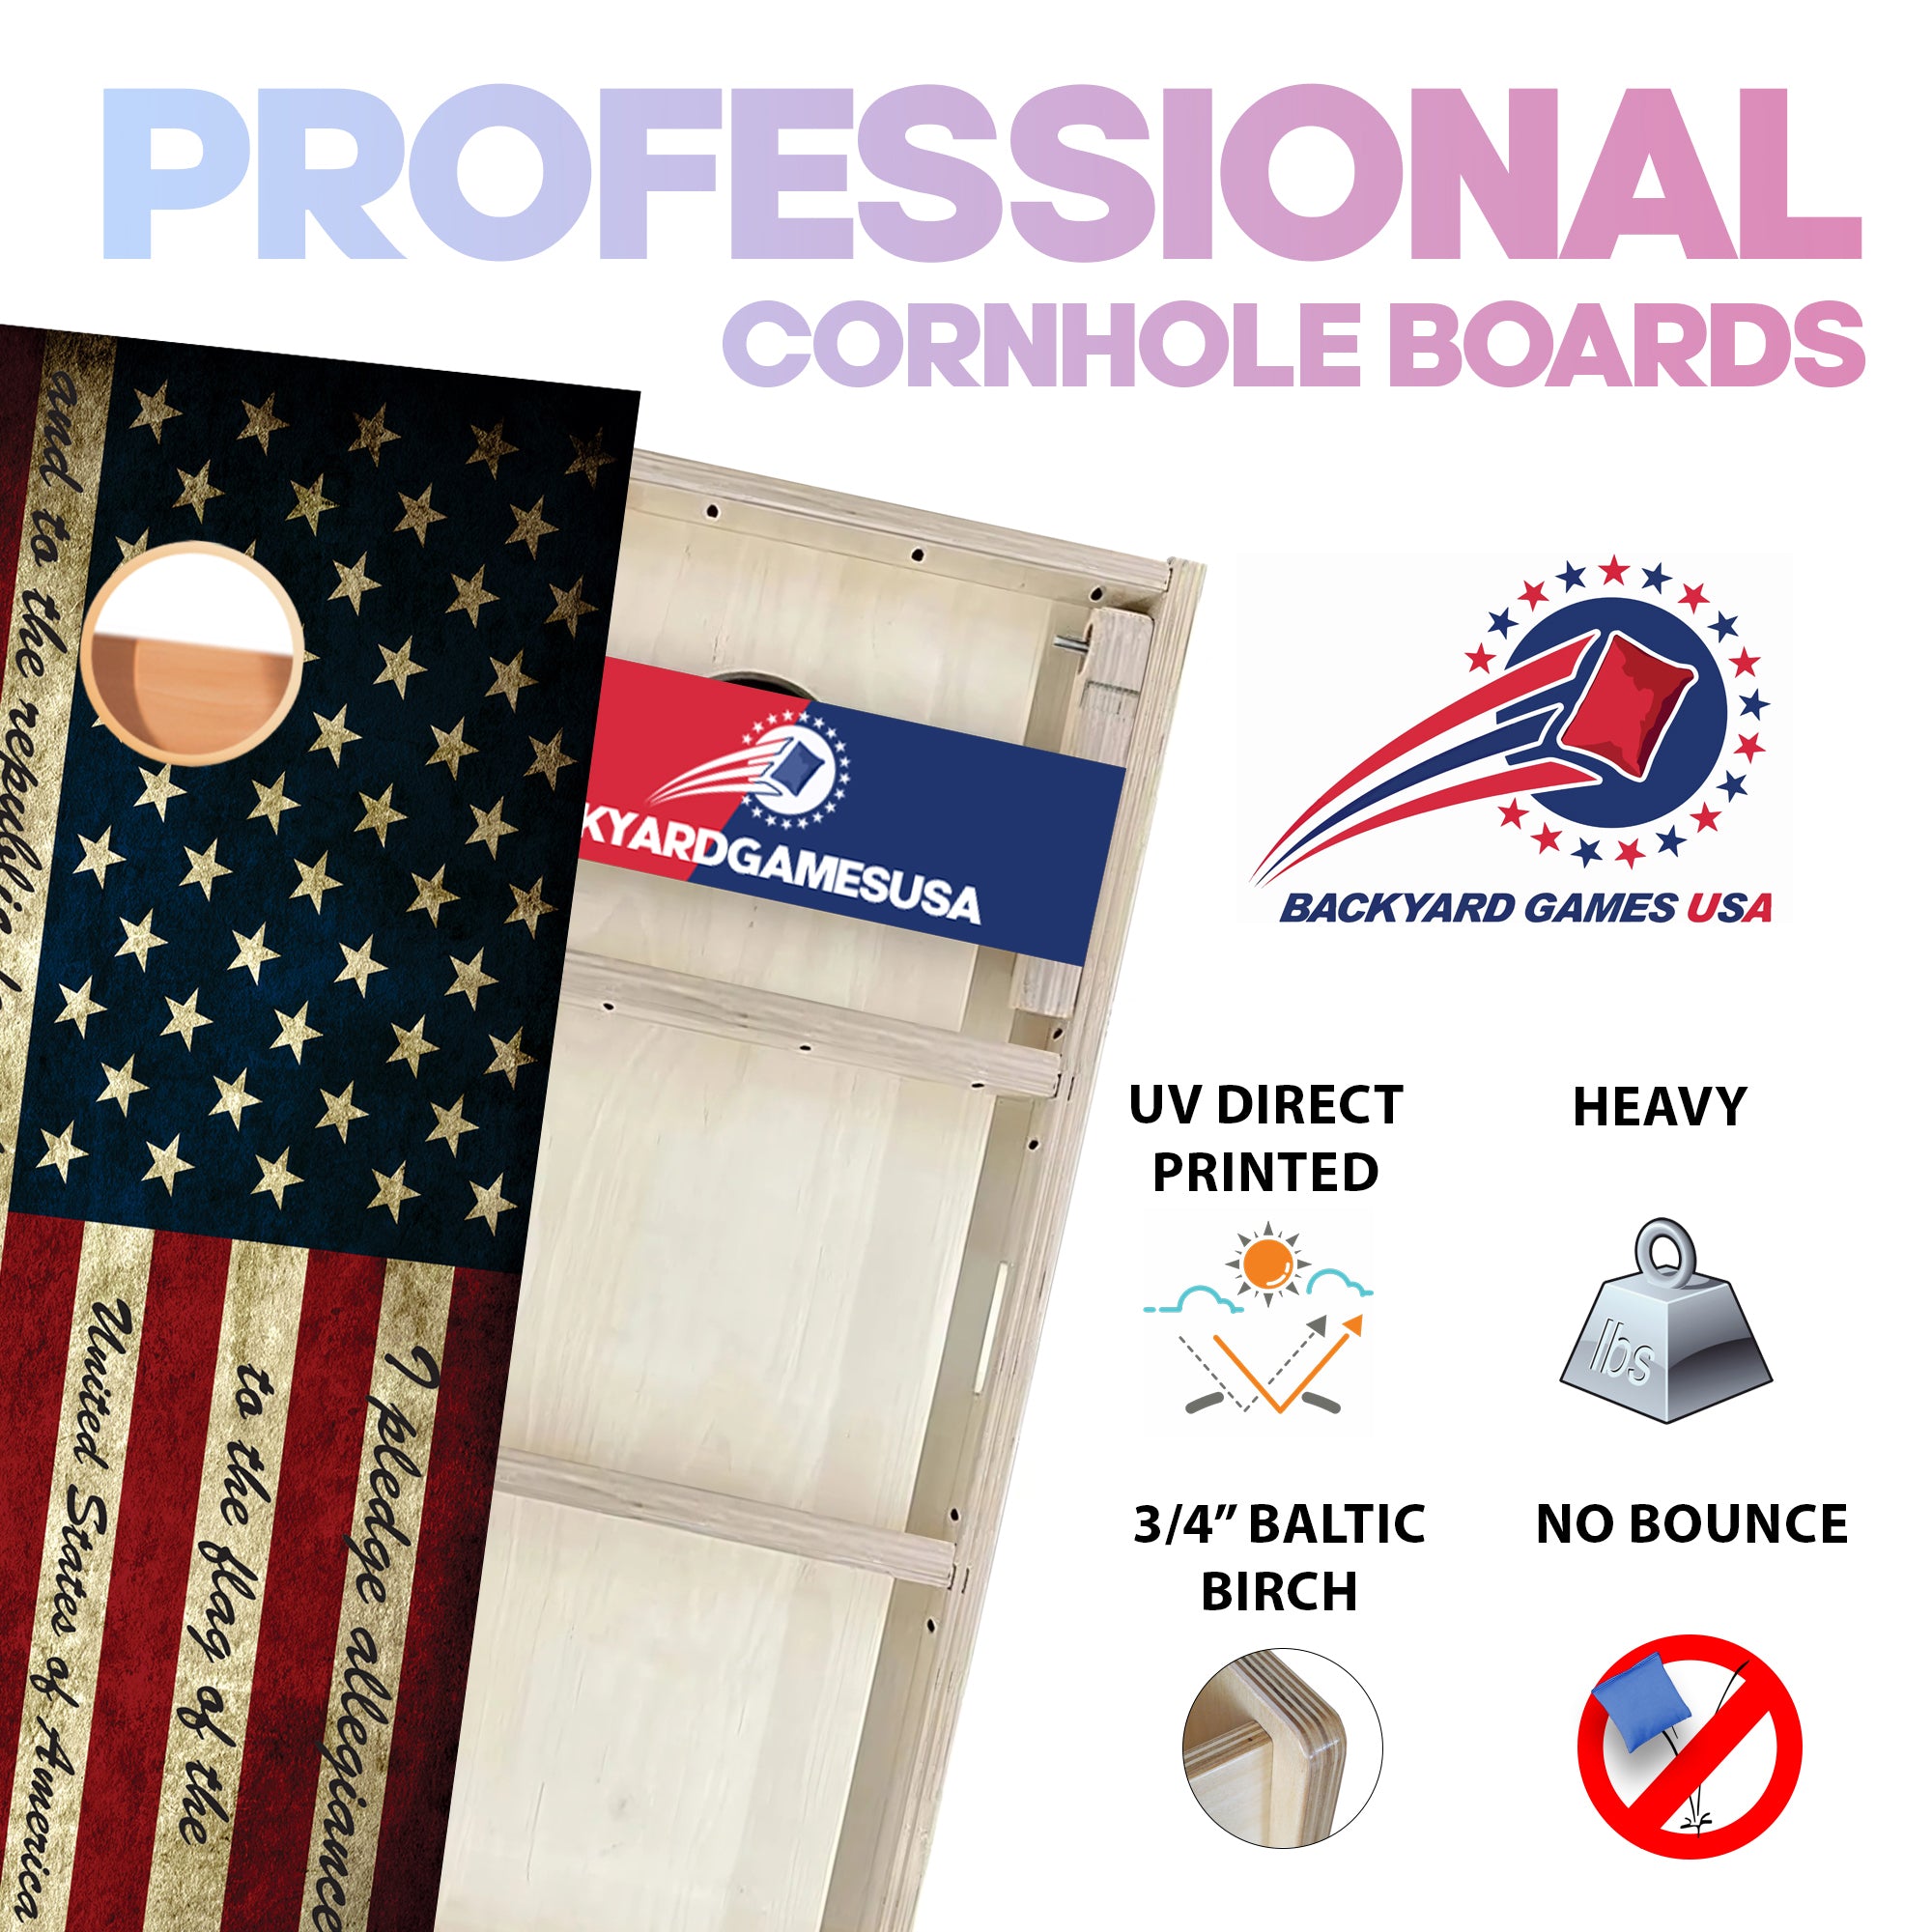 Pledge of Allegiance Professional Cornhole Boards